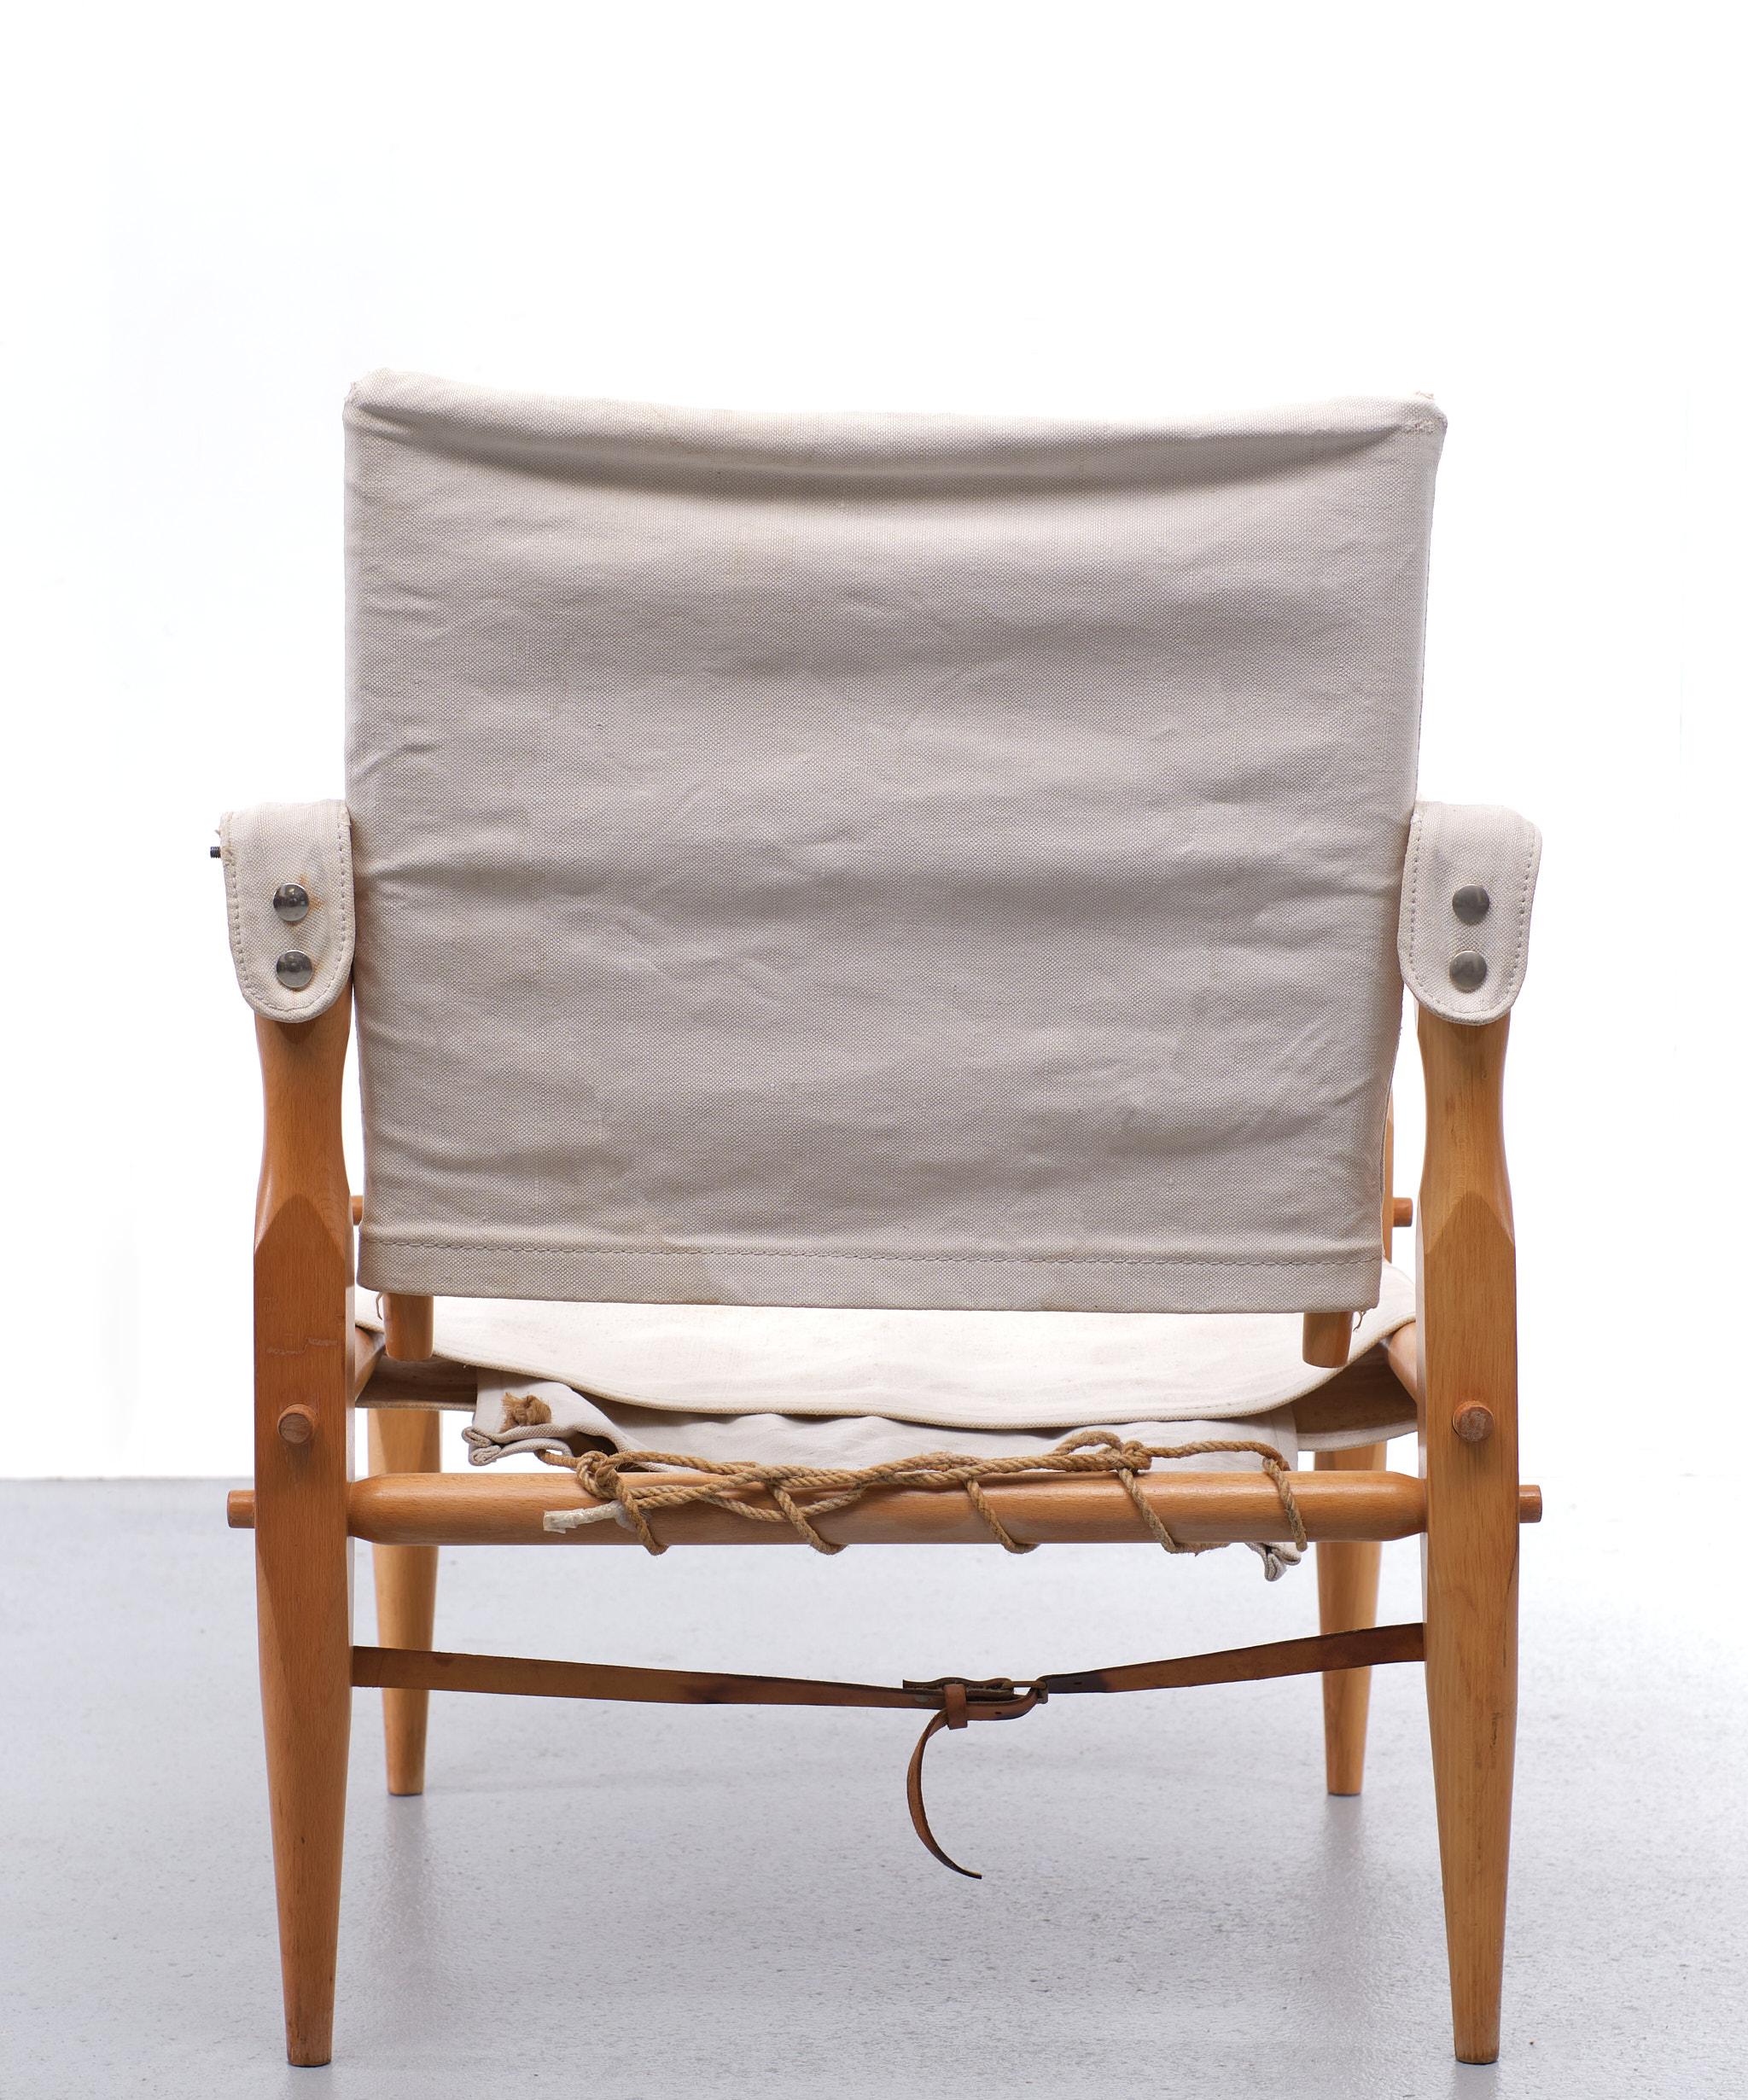 Vintage safari chair 1960s Denmark For Sale 1